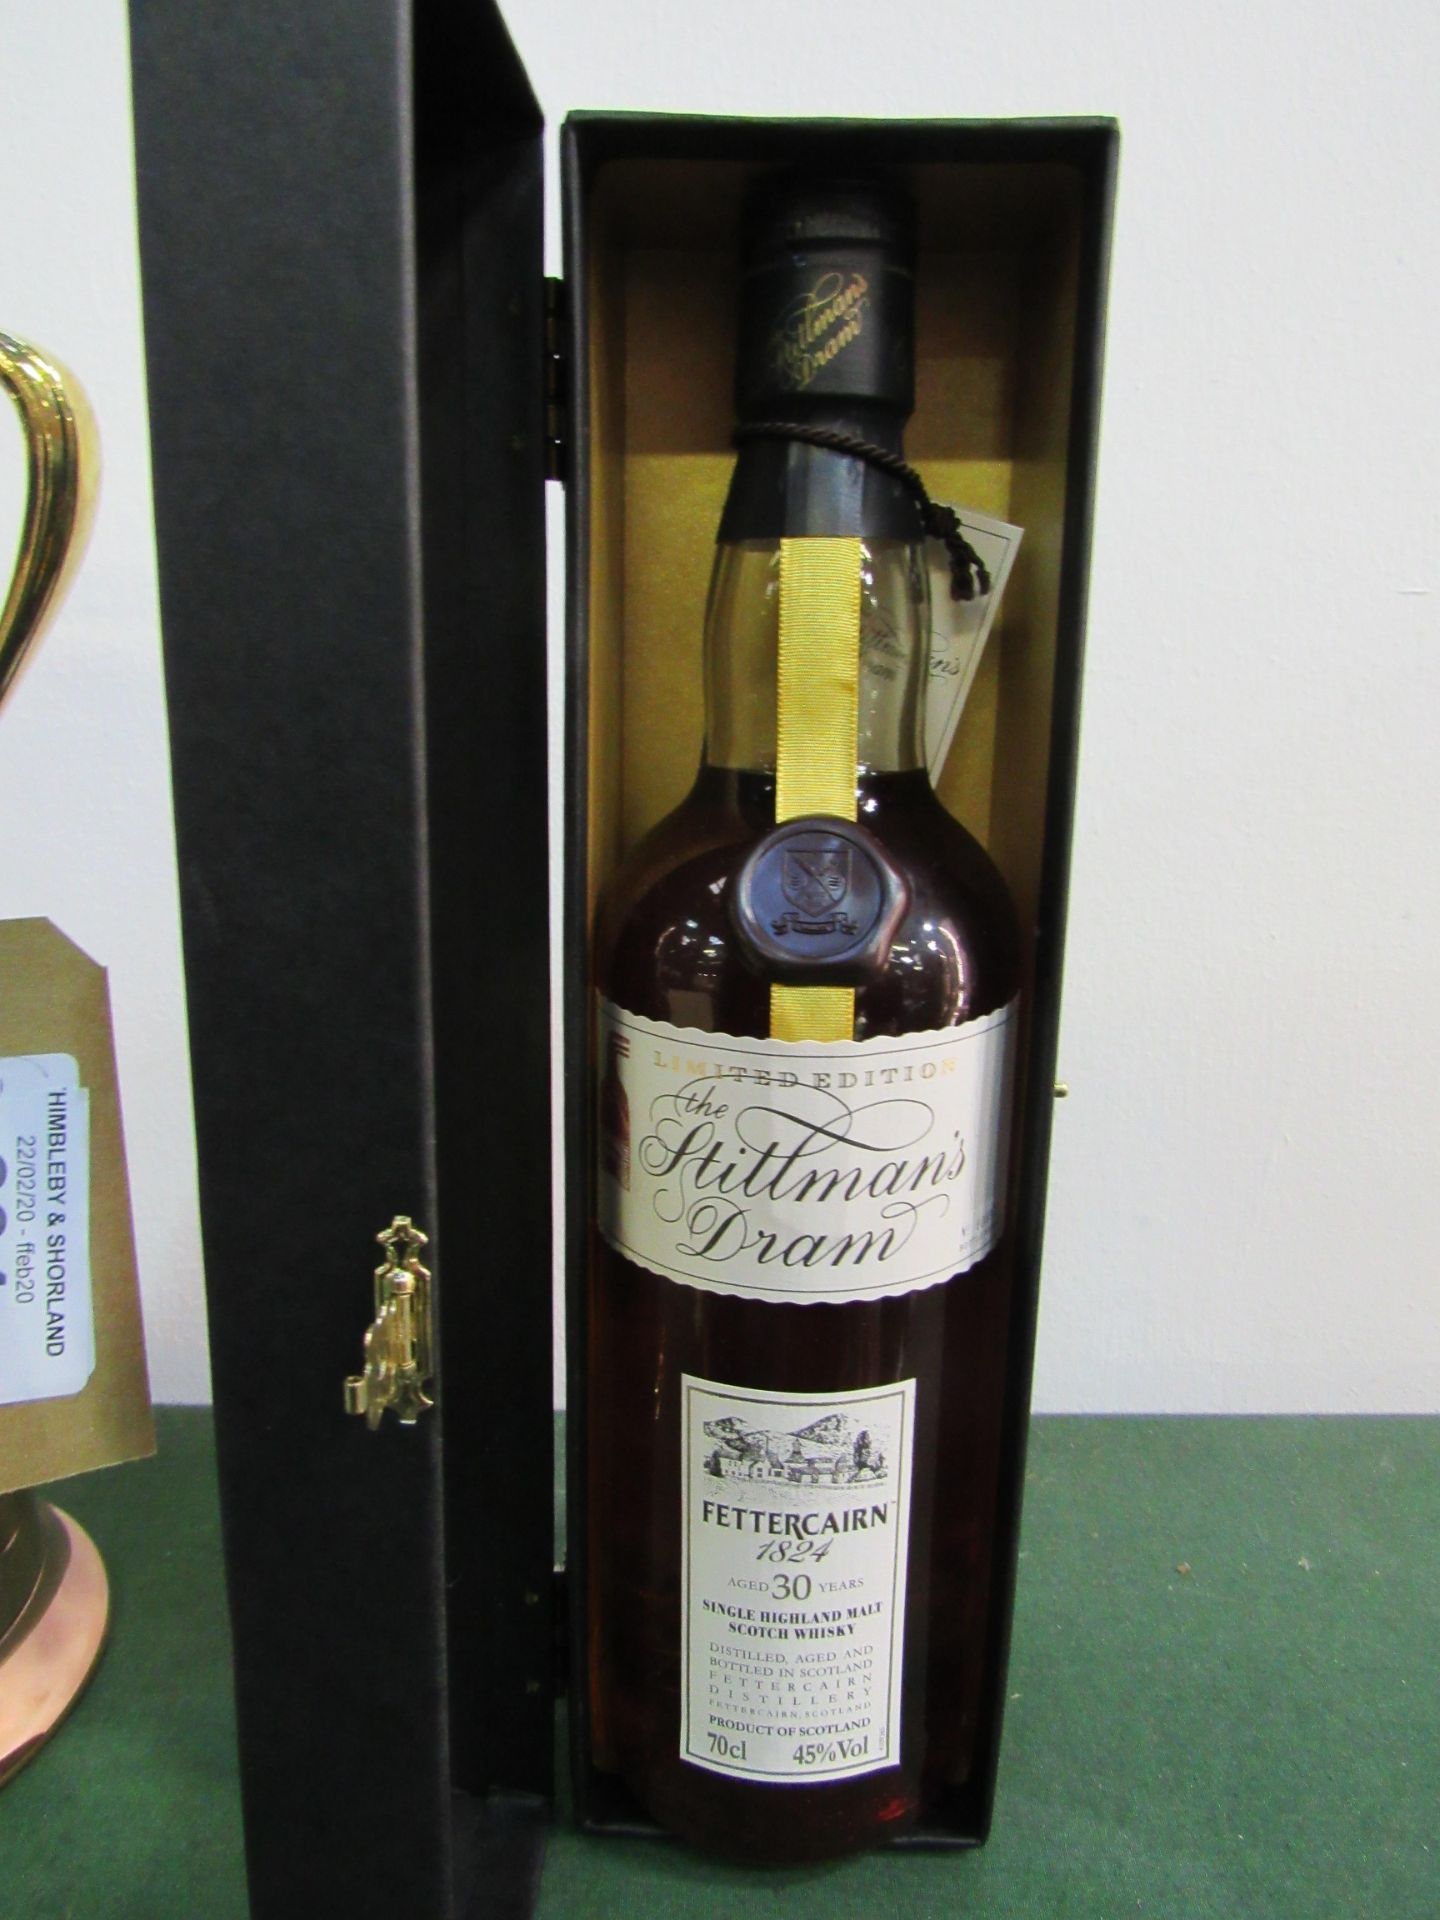 70cl ""The Stillman's Dram whisky"", Fettercairn 1824 single malt whisky, Aged 30 Year. In